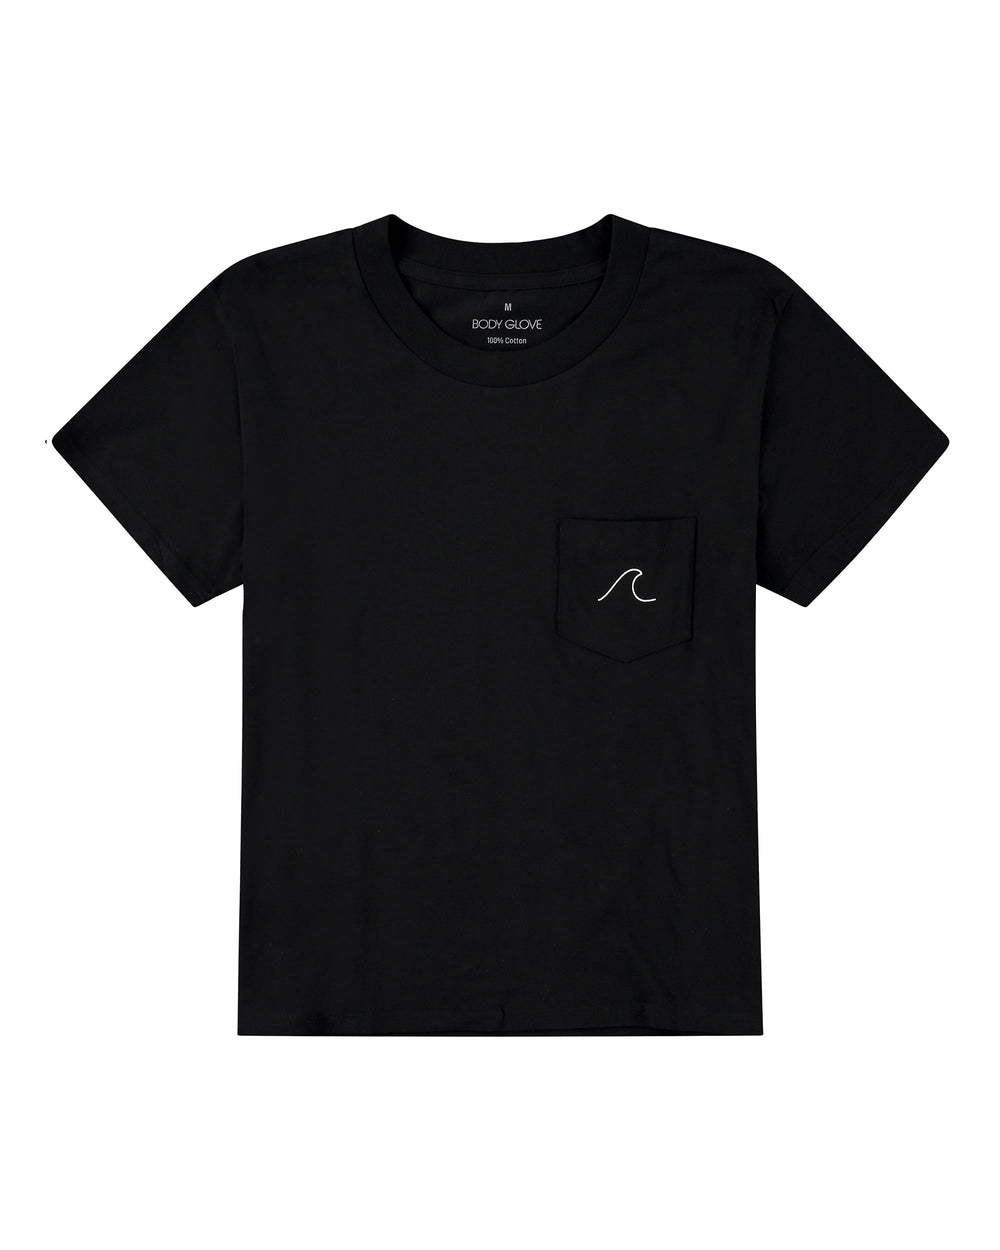 Tati x Body Glove Wave Pocket T-Shirt - Black